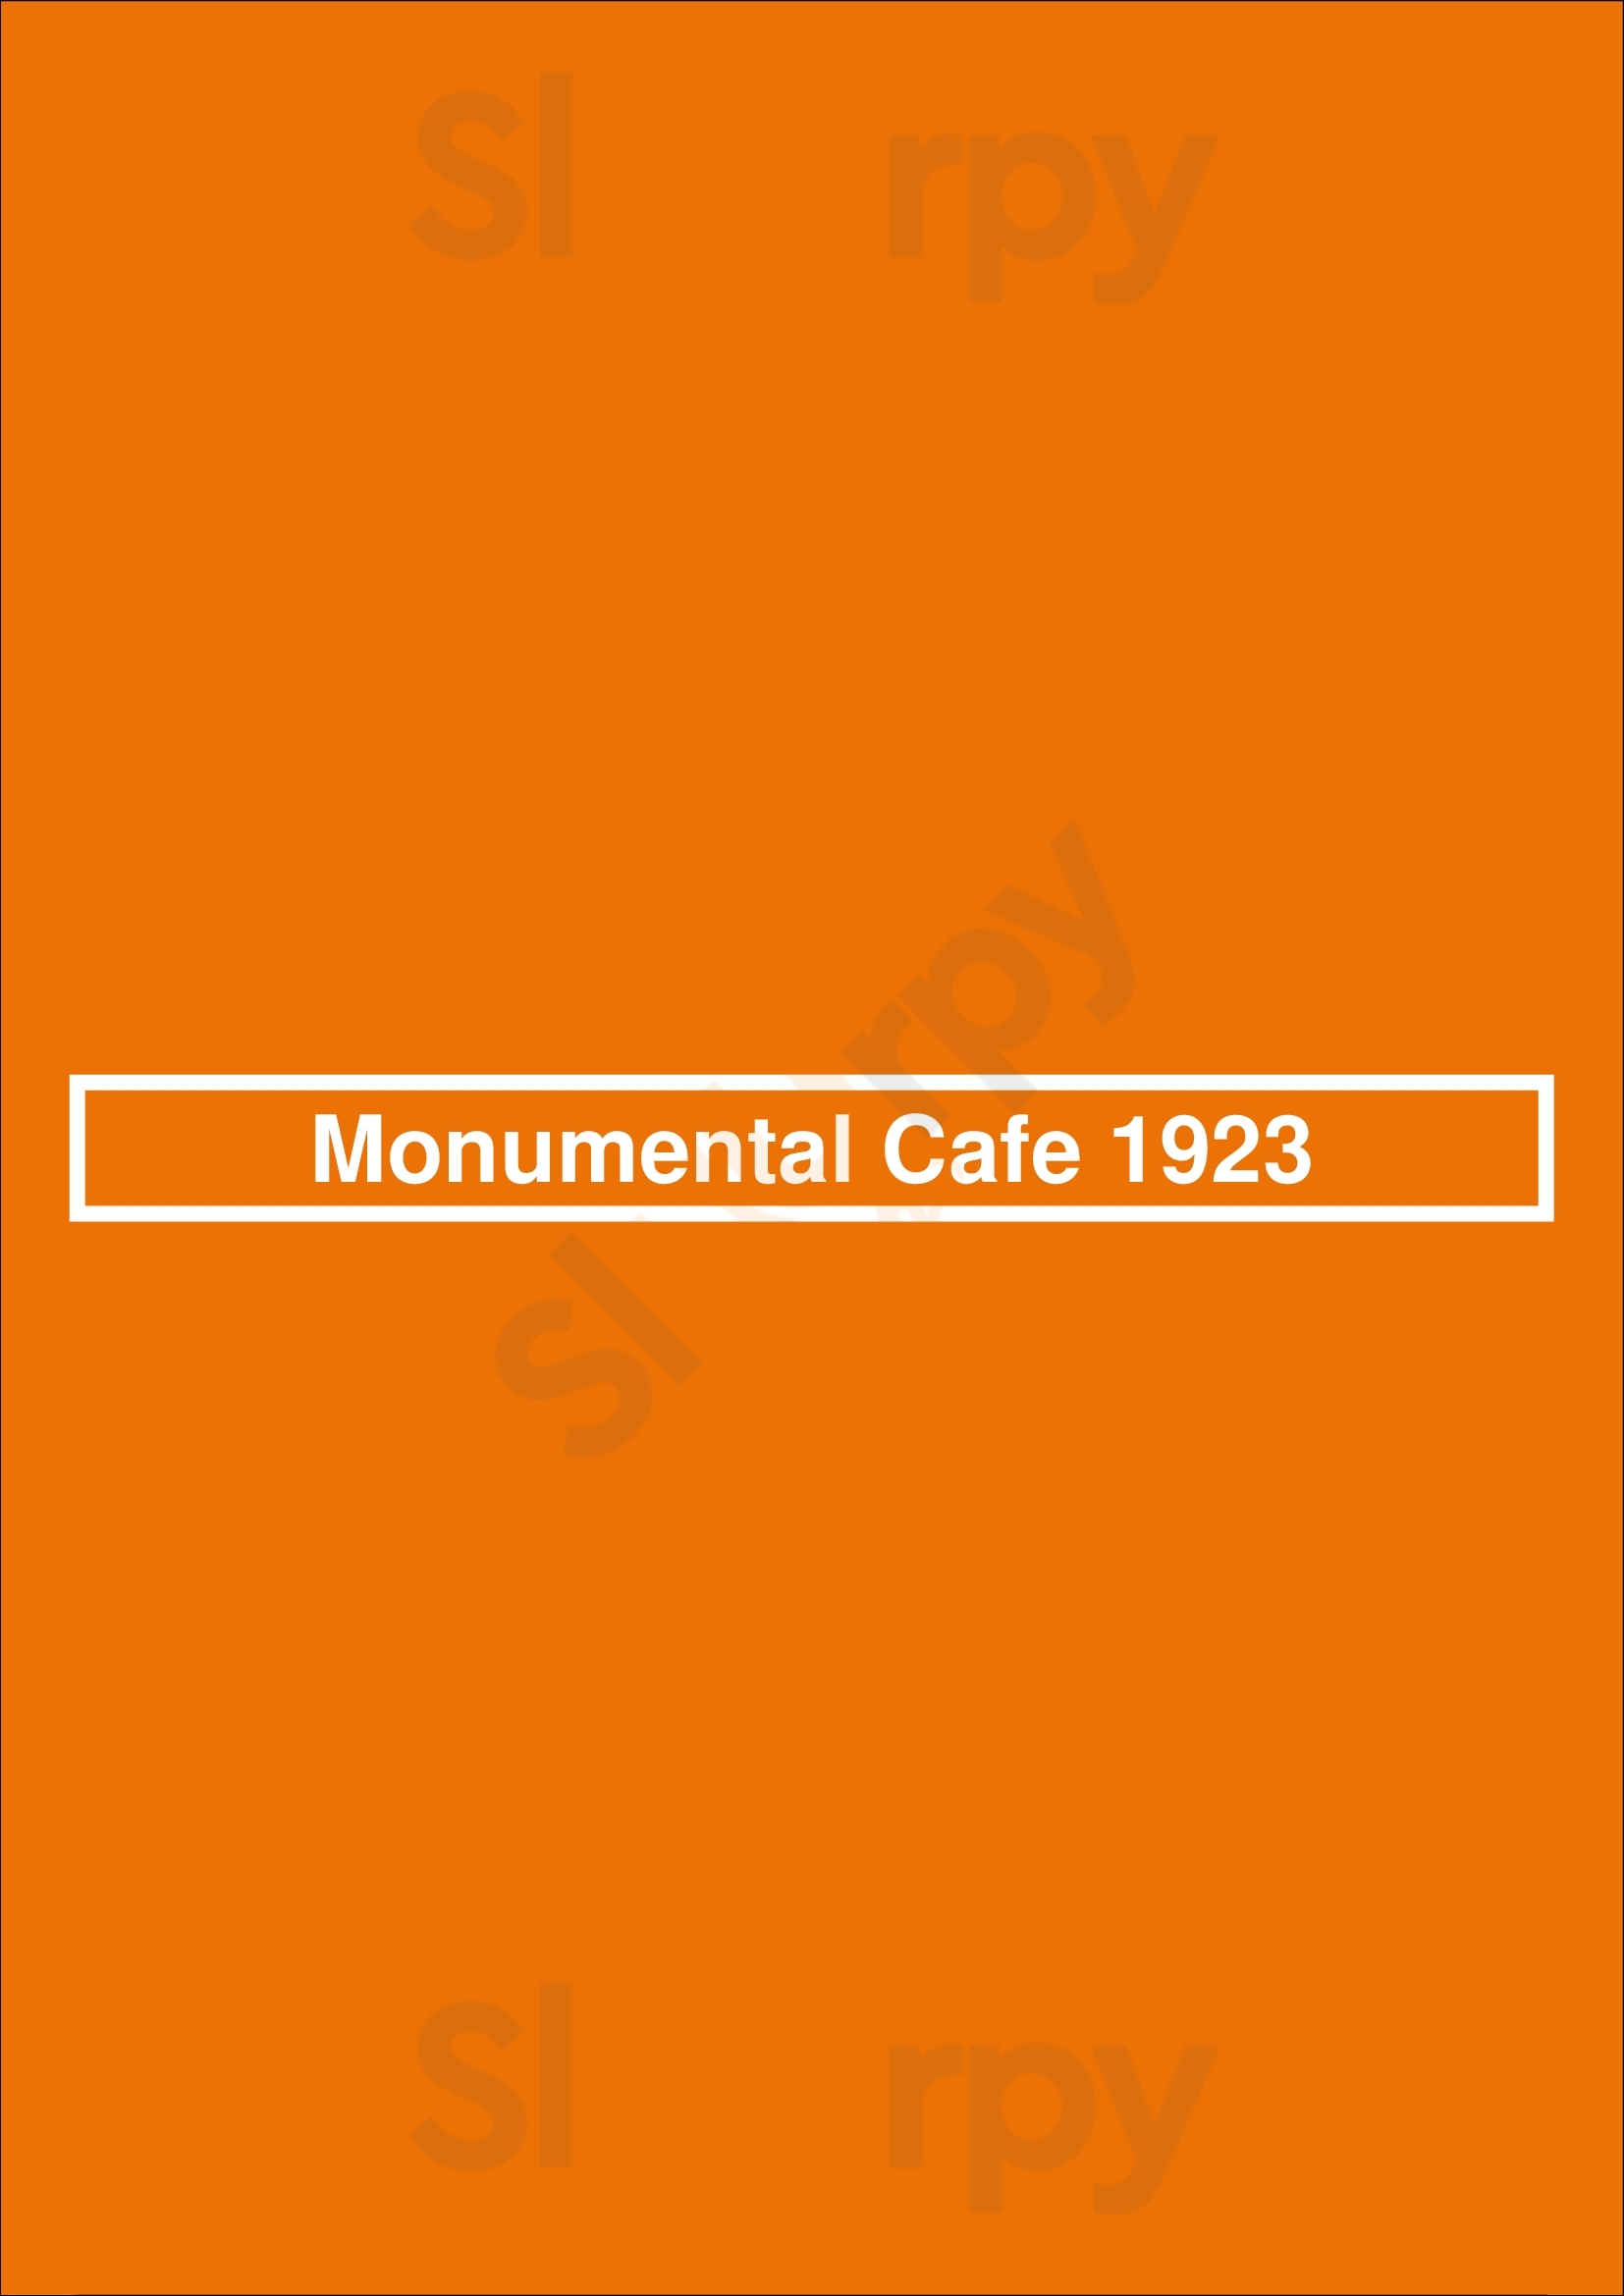 Monumental Cafe 1923 Porto Menu - 1